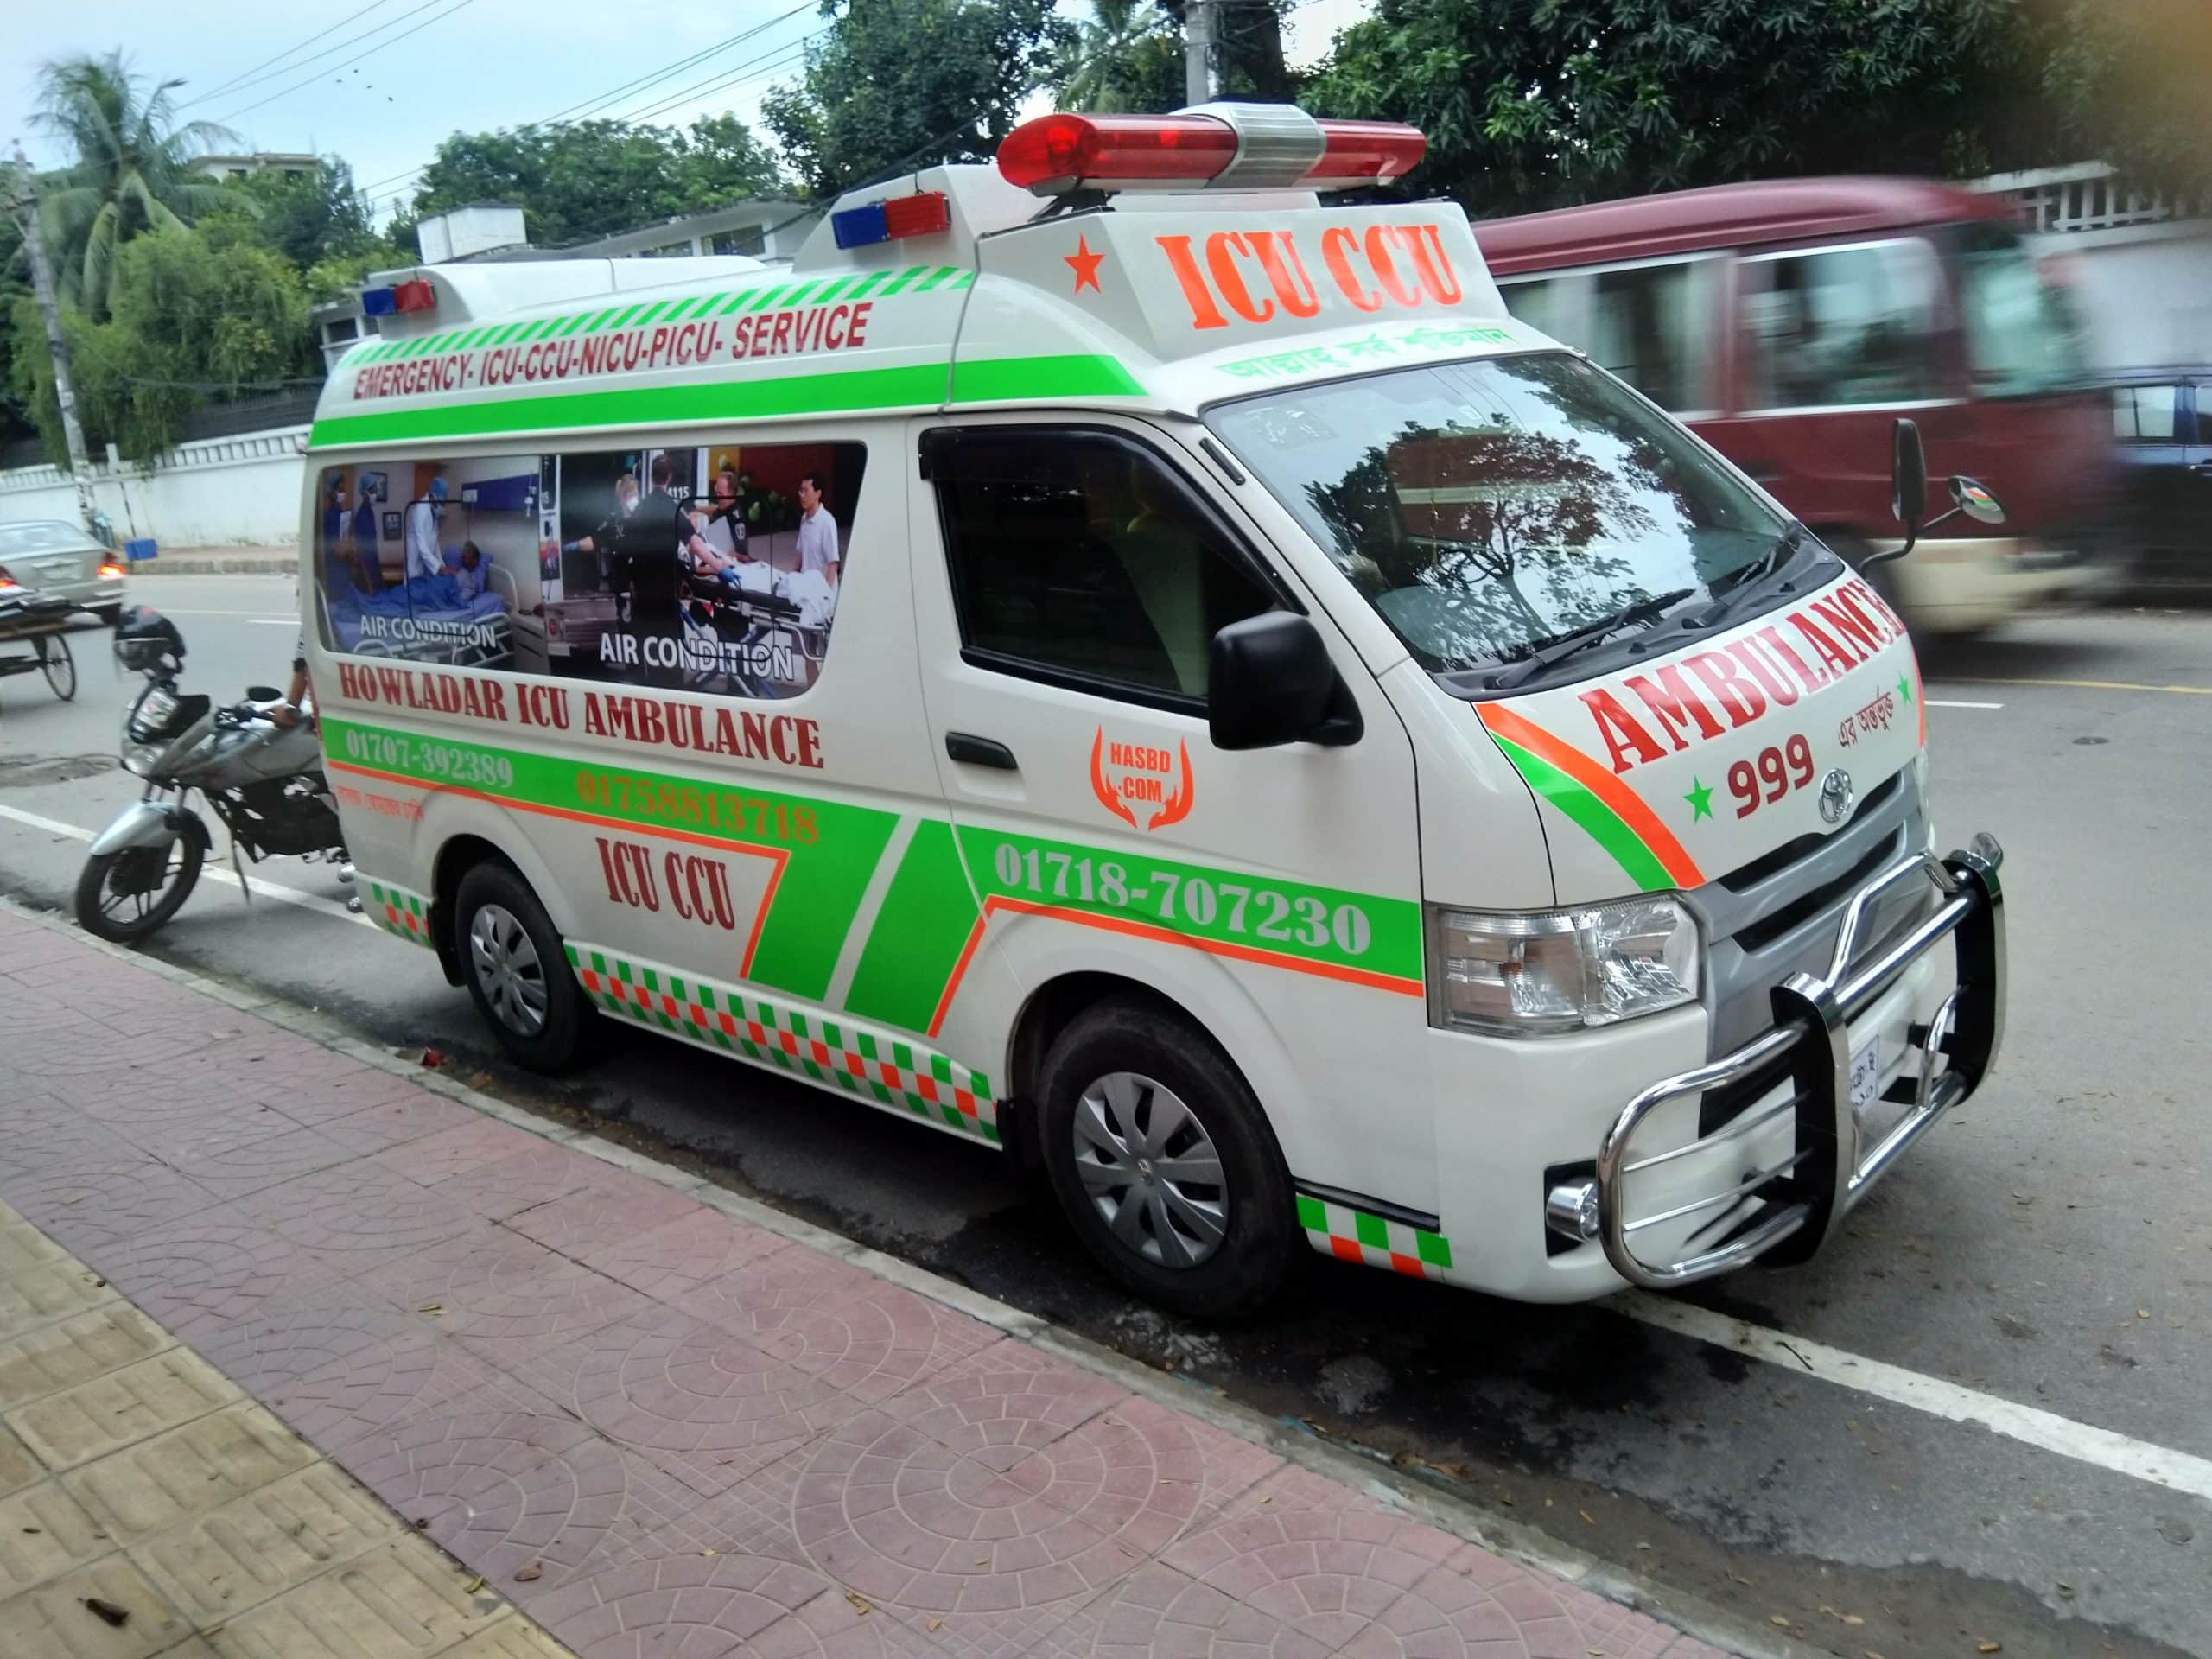 Advanced-life-support-Ambulance-outside